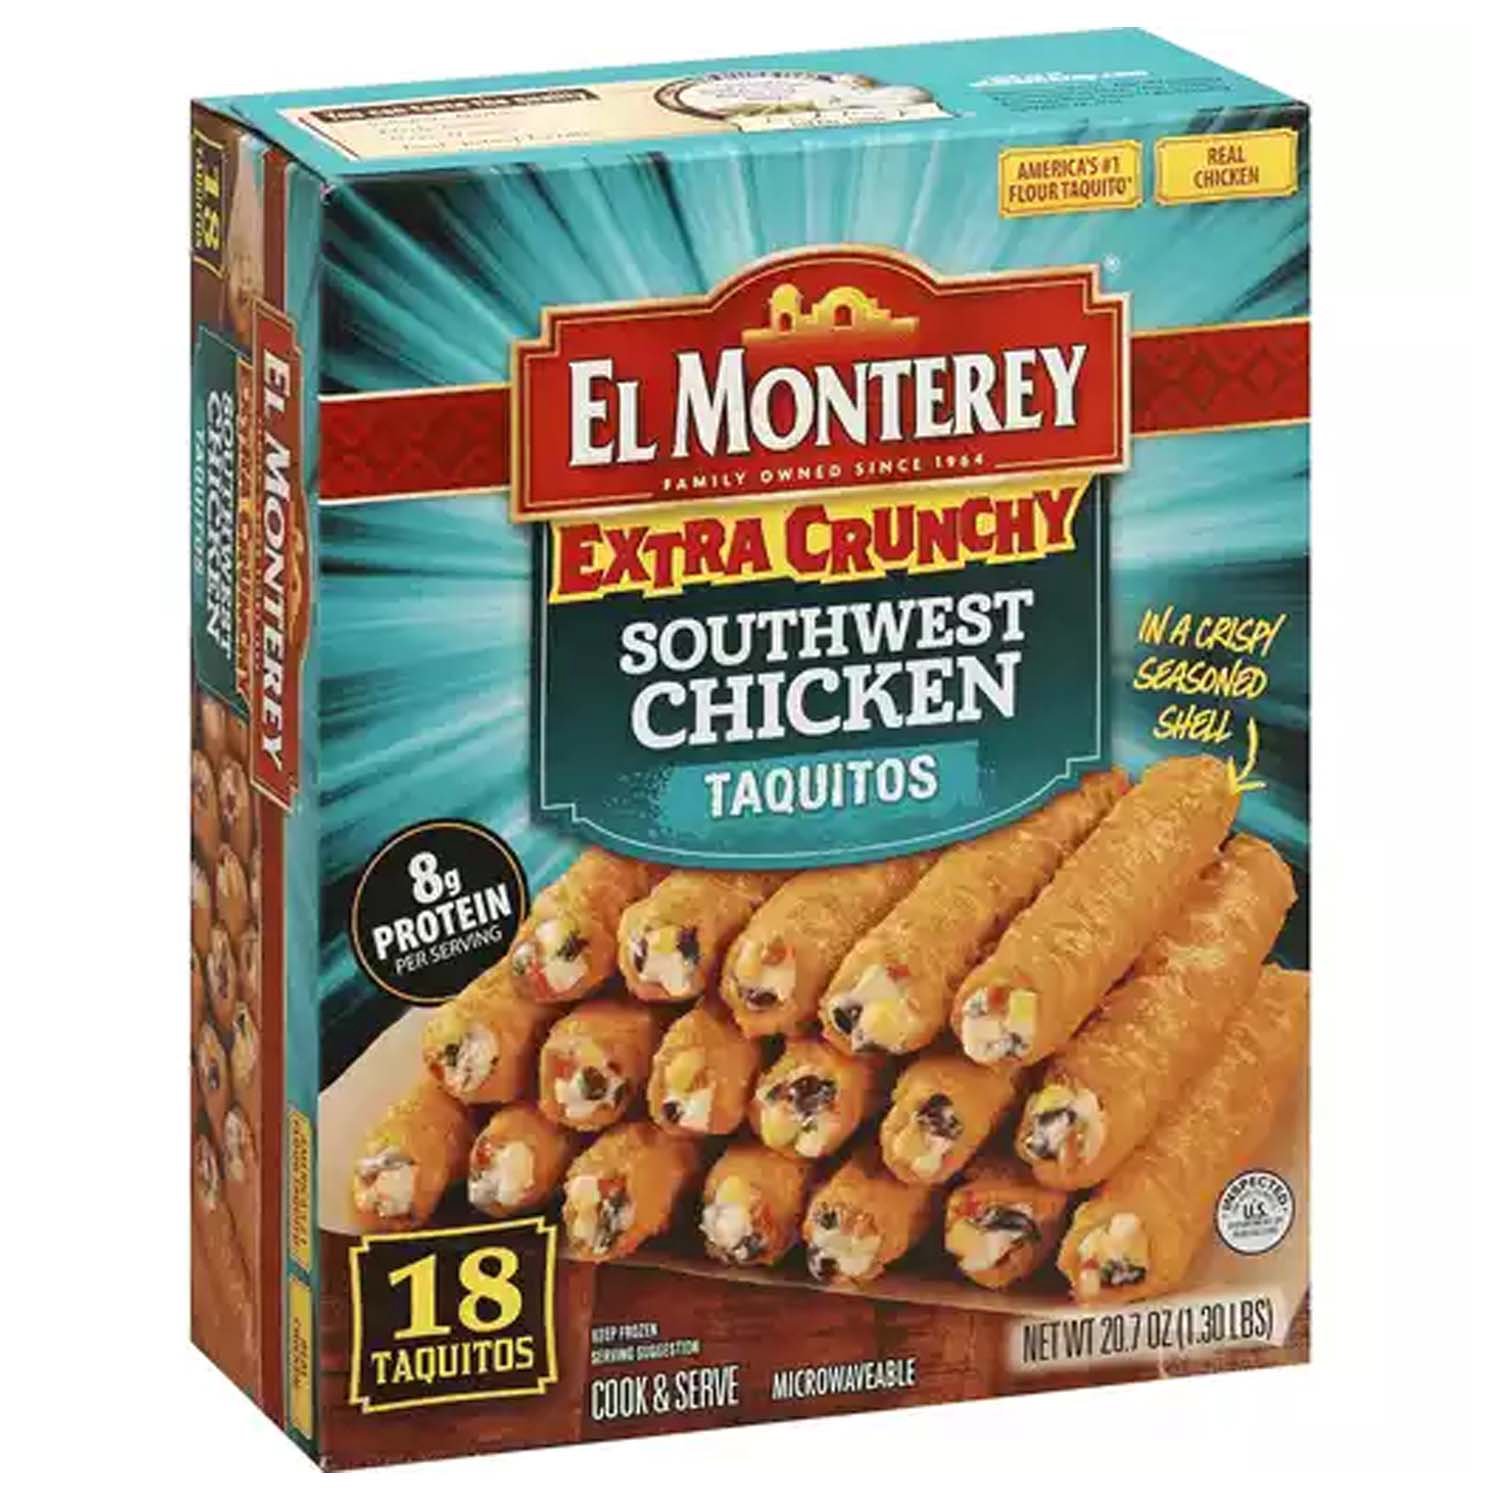 El Monterey Crunchy Chicken Taquitos Extra Southwest